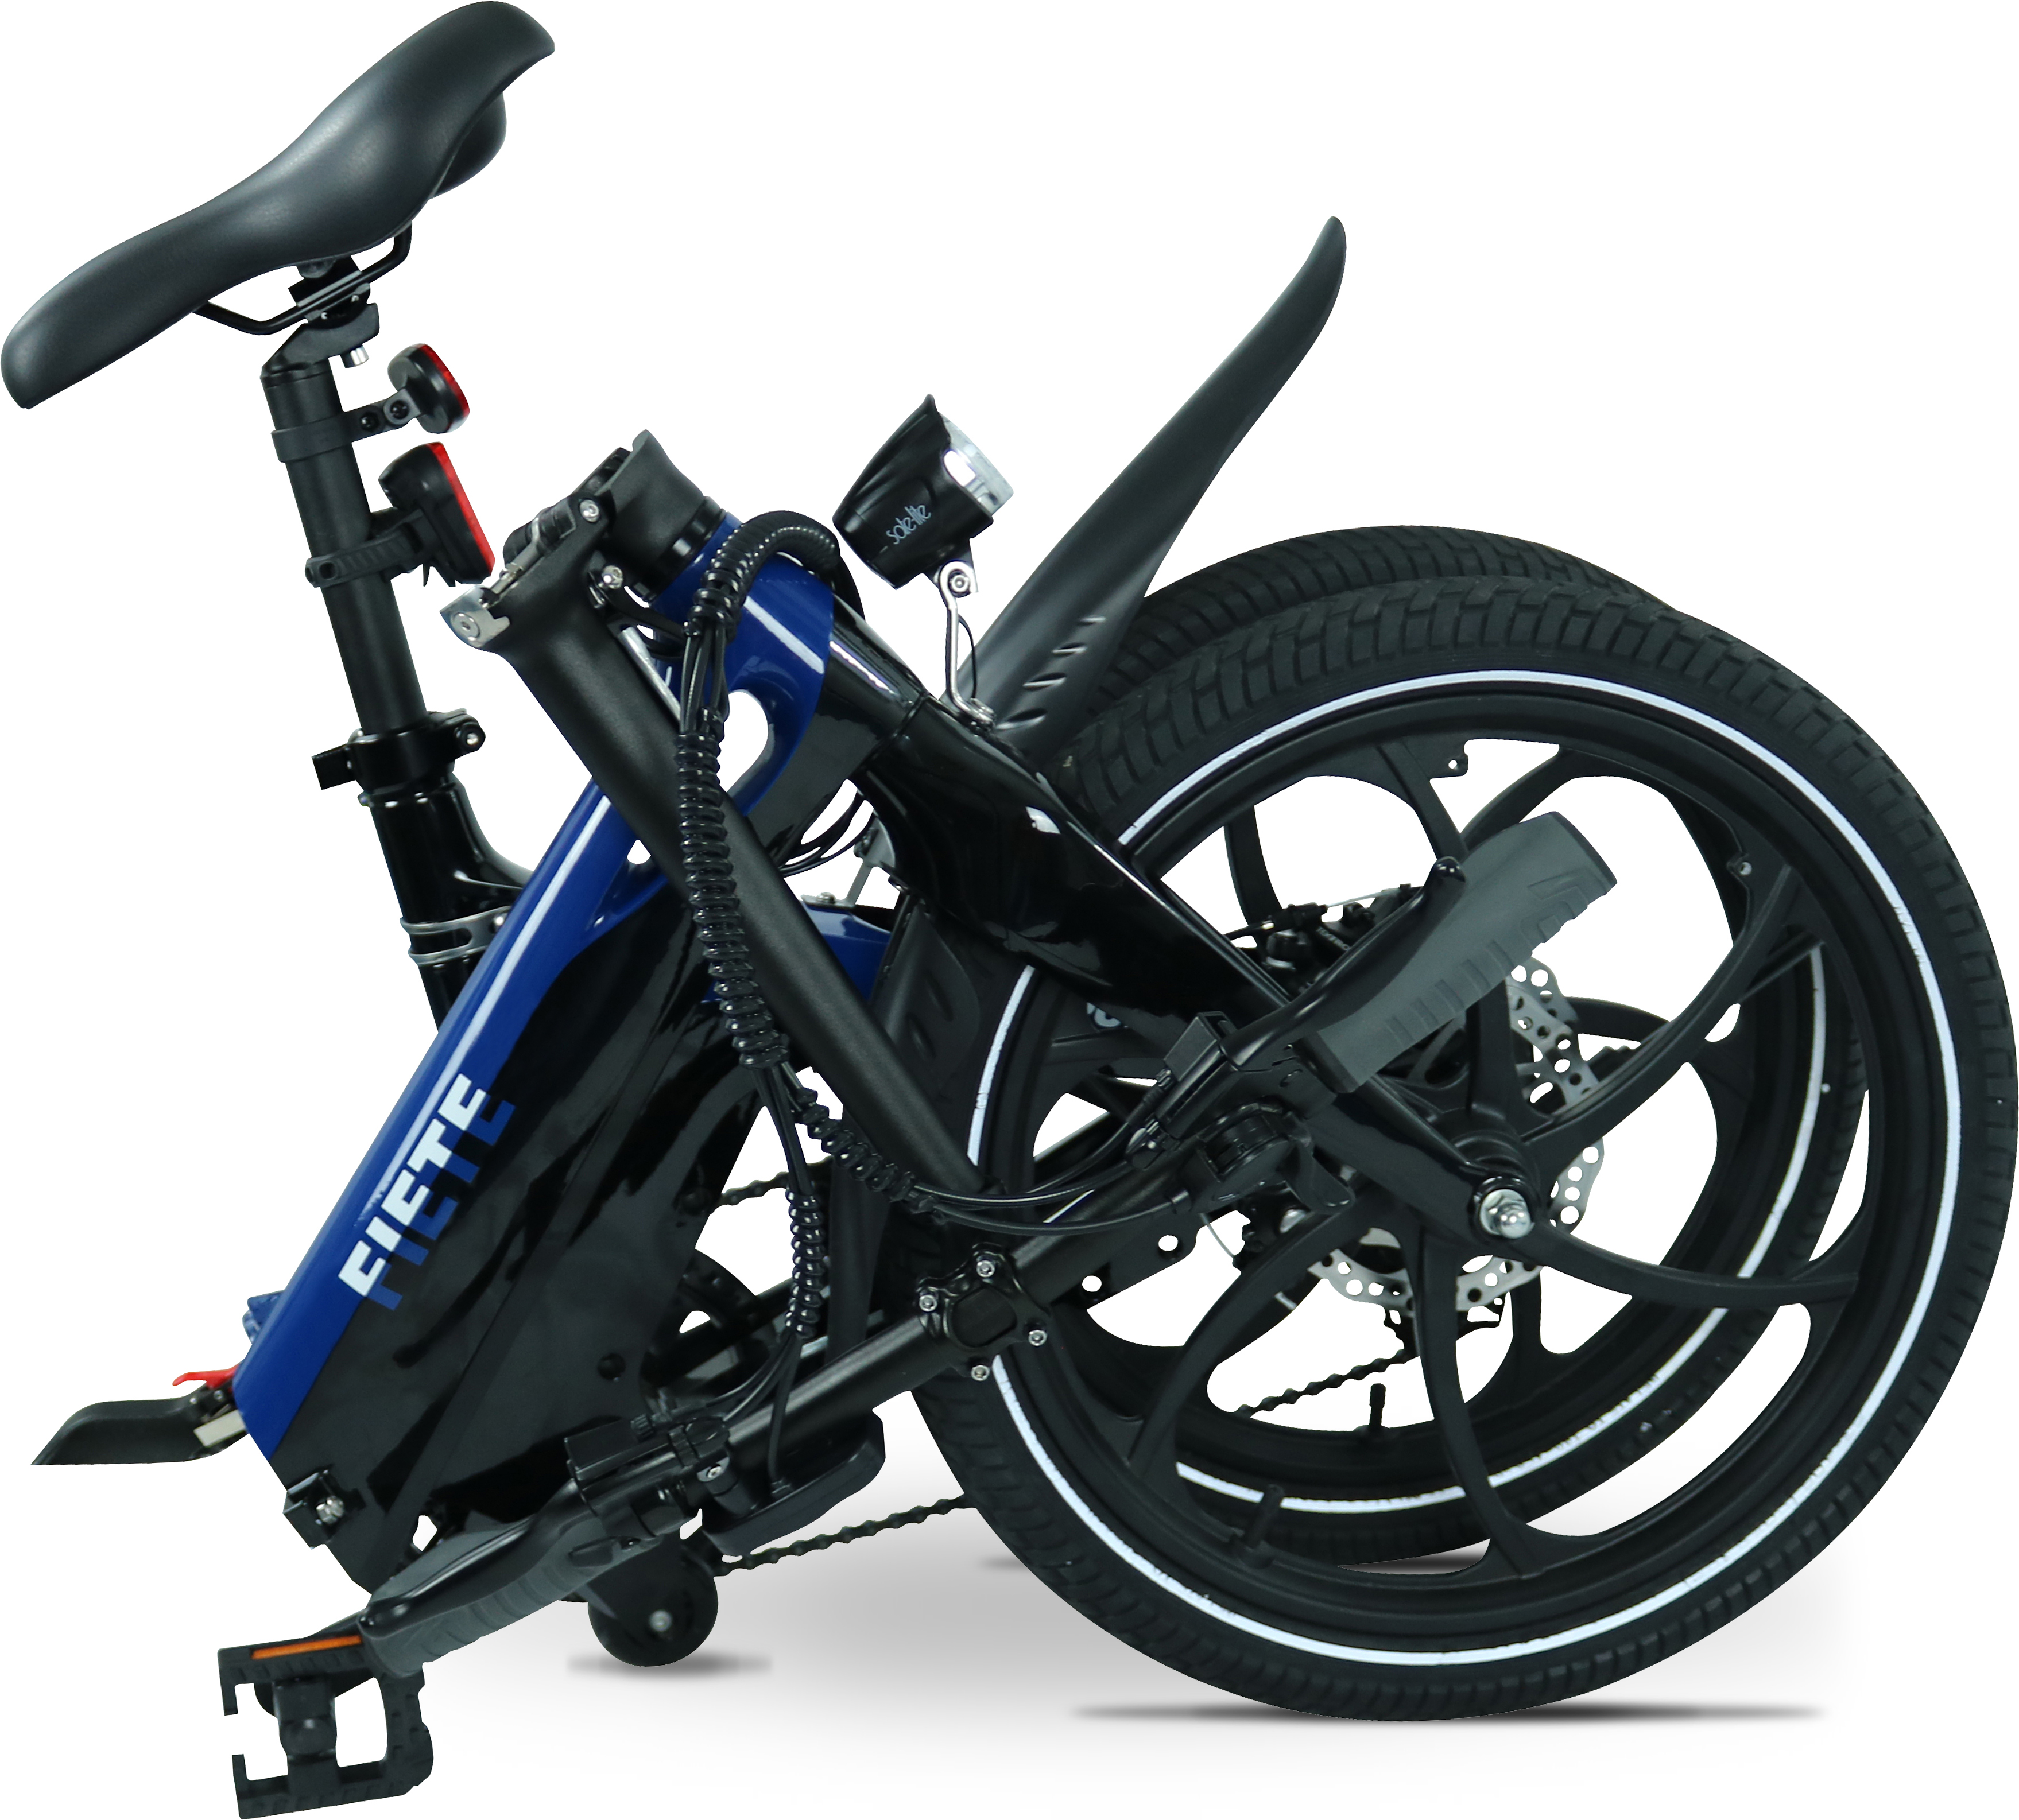 Blaupunkt's folding e-bike model.